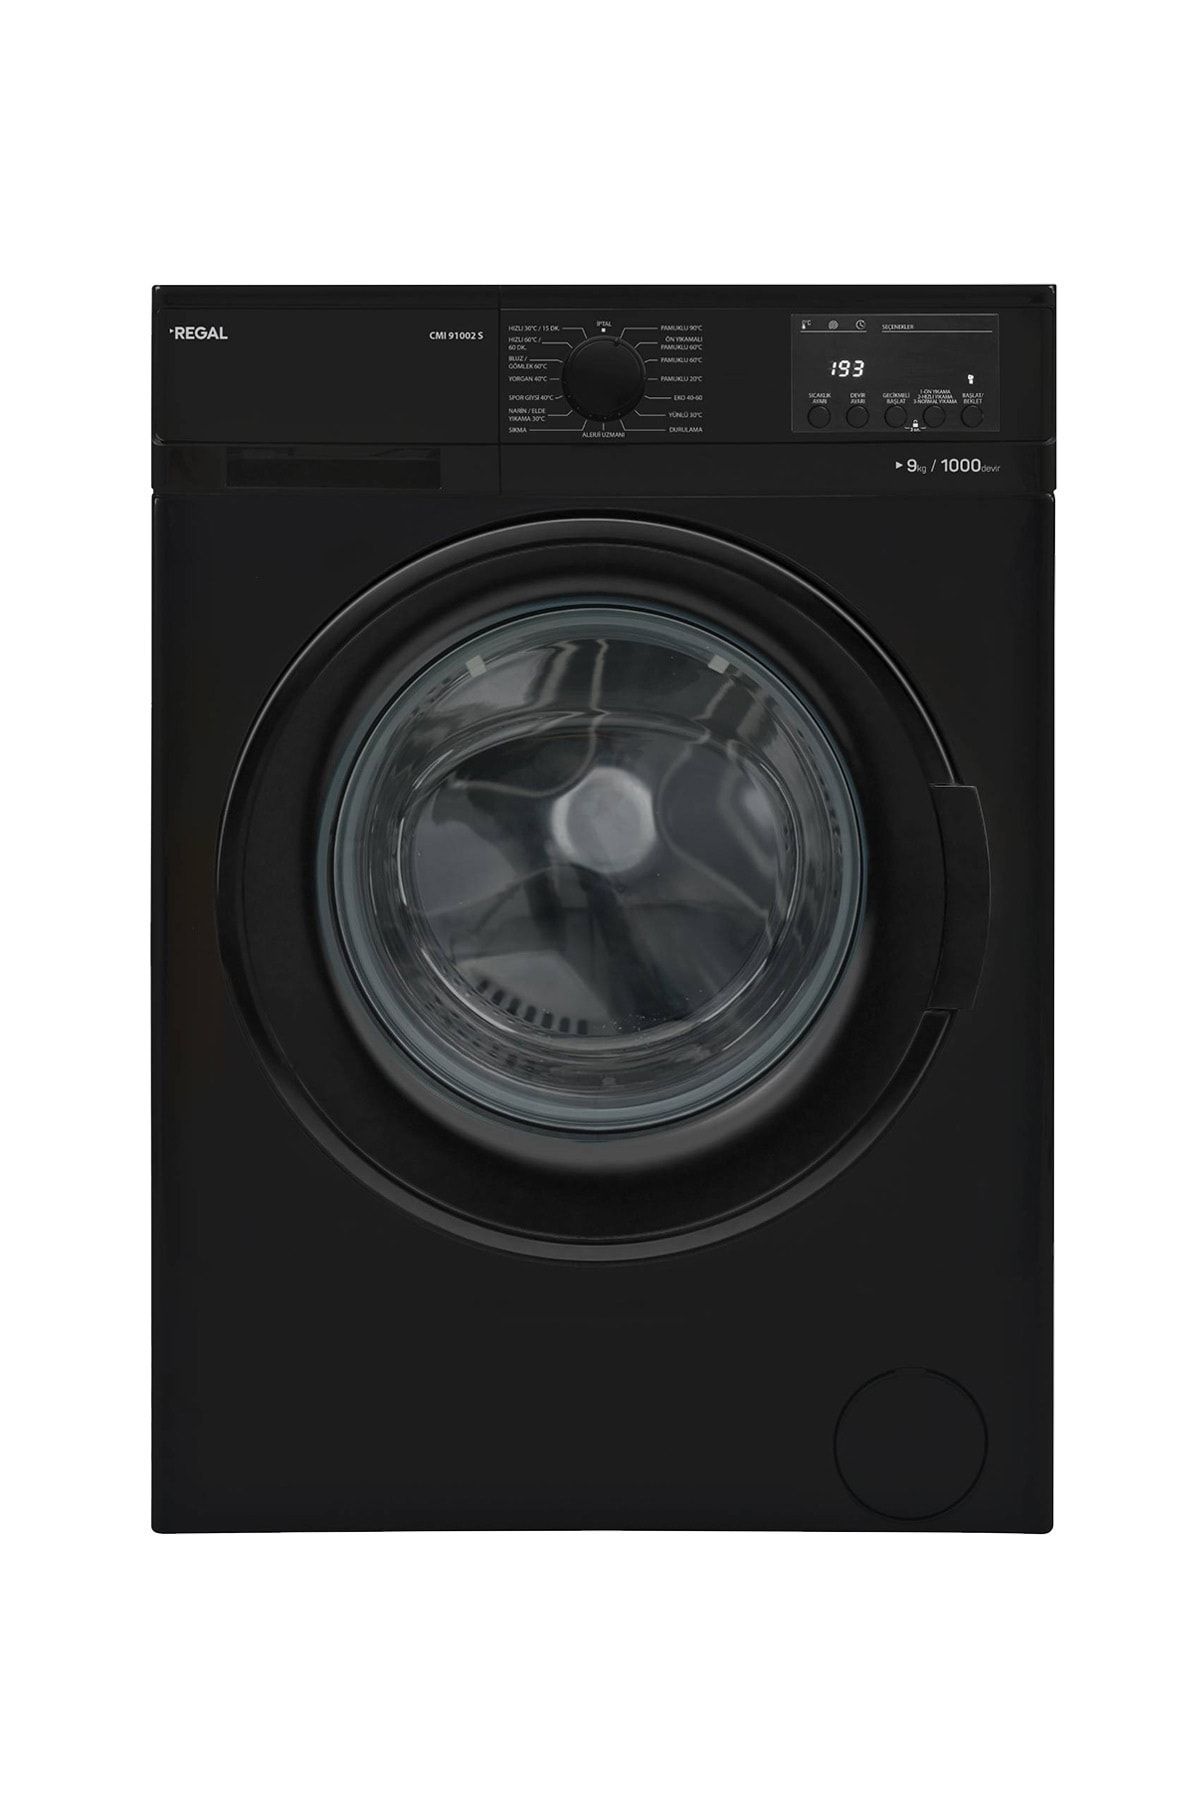 Regal Cmı 91002 S Çamaşır Makinesi